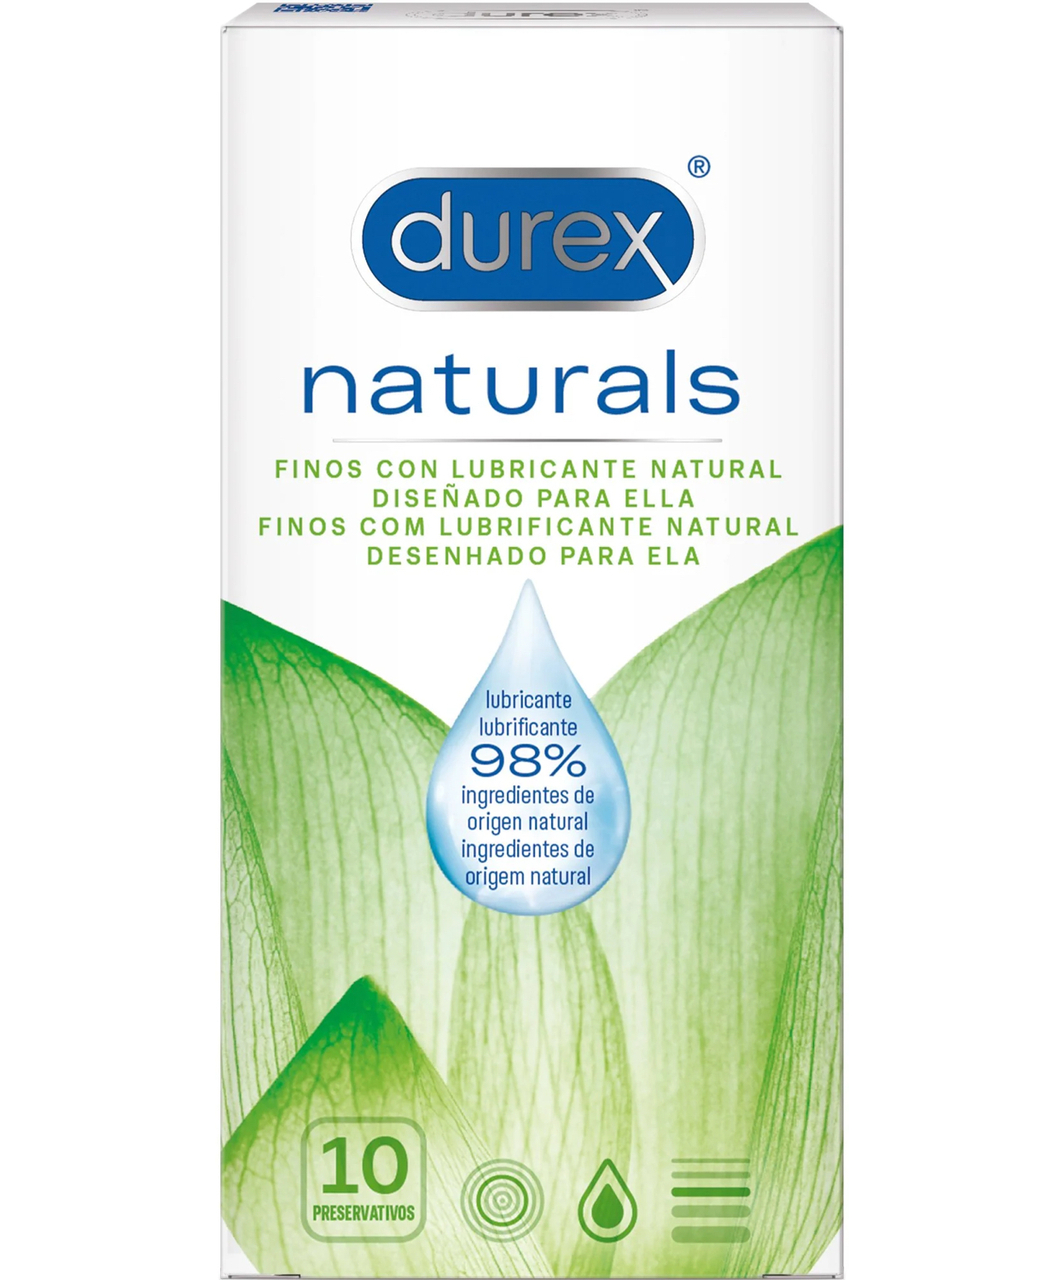 Durex Naturals kondoomid (10 tk)